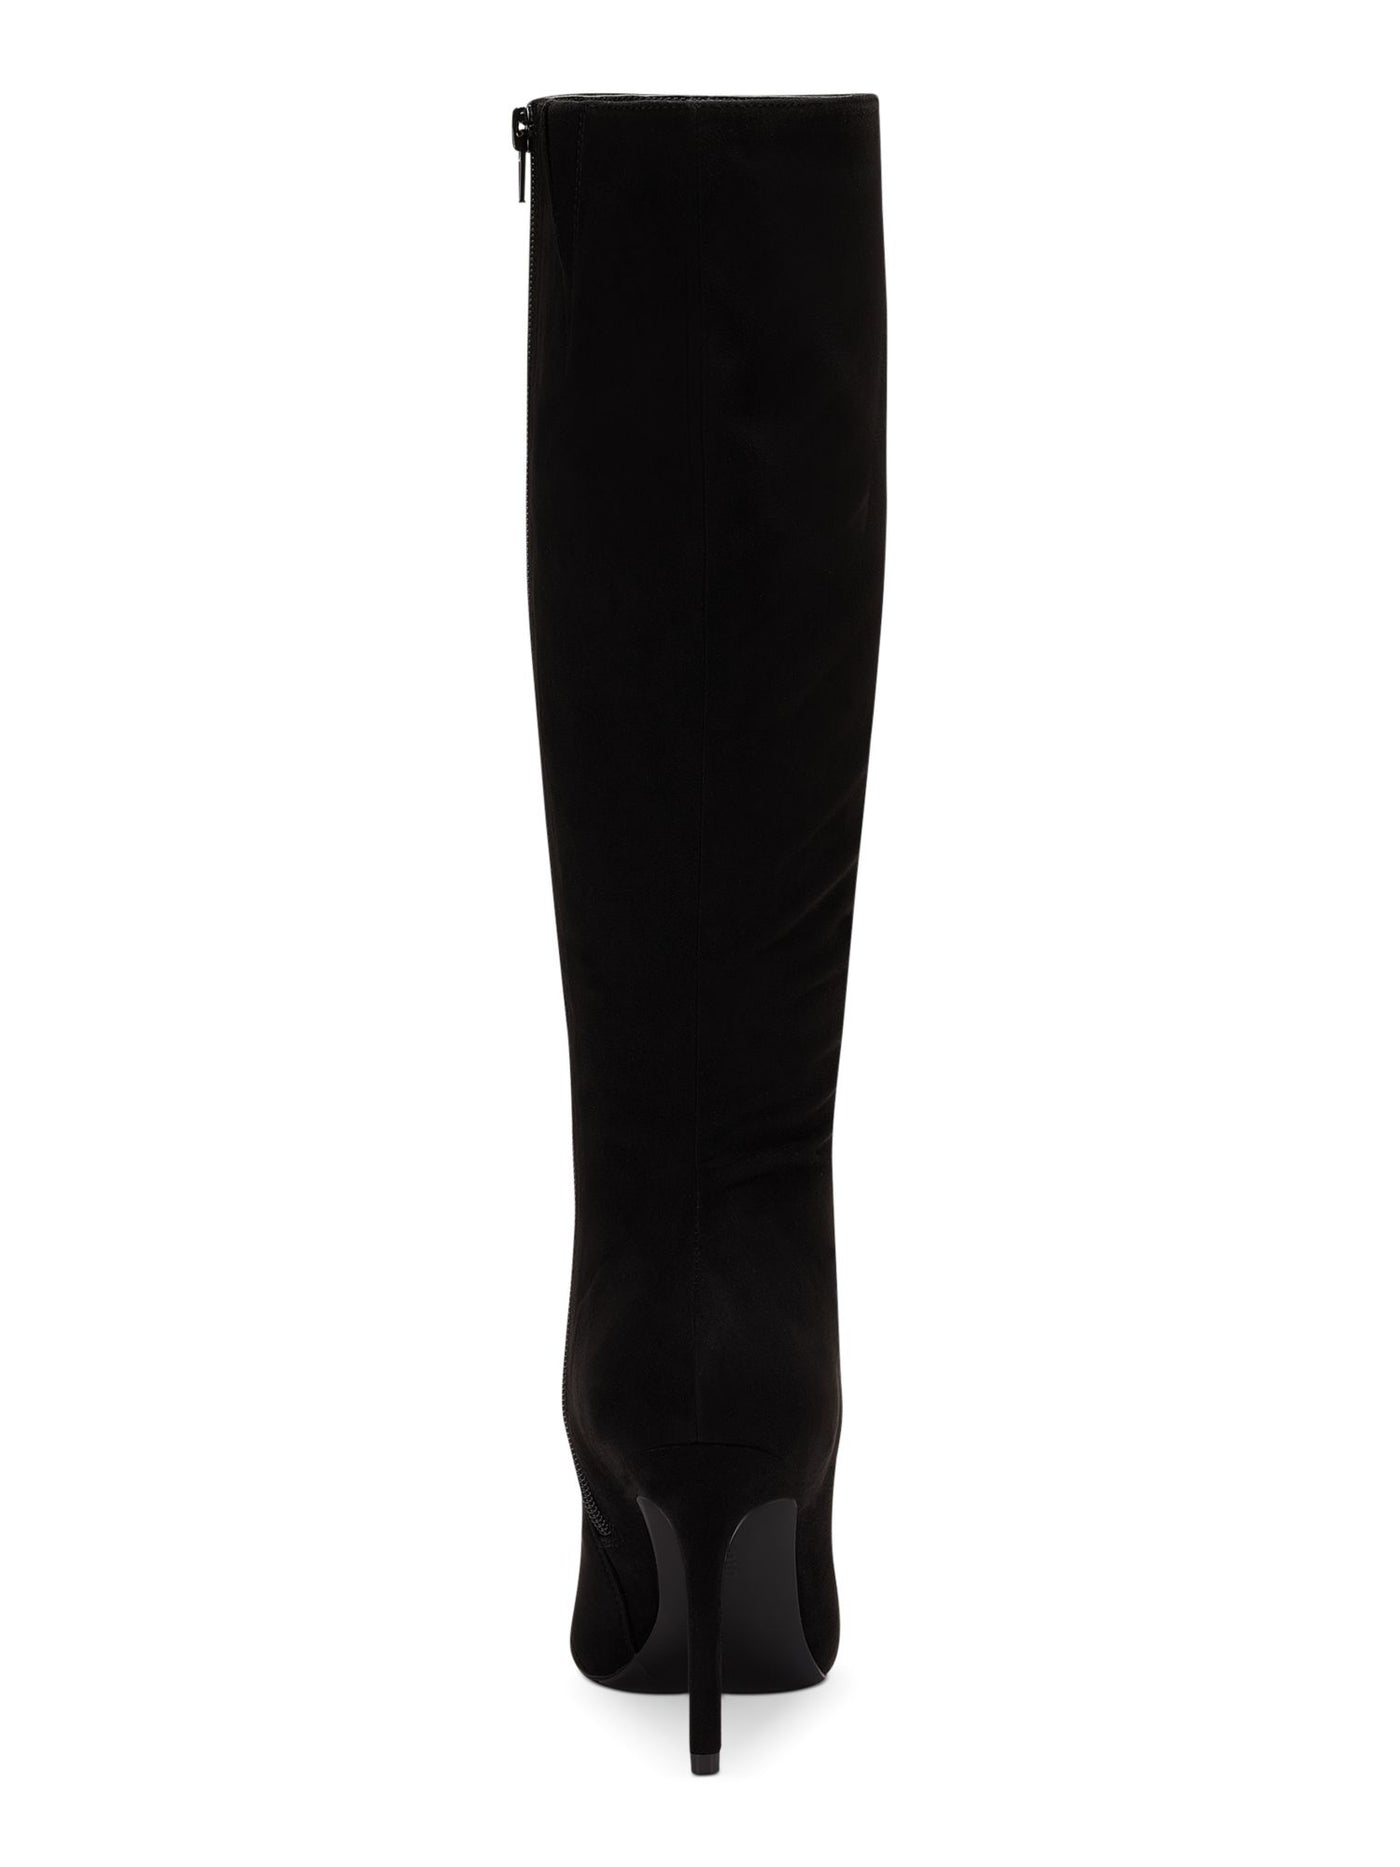 INC Womens Black Cushioned Rajel Pointy Toe Stiletto Zip-Up Dress Boots 8 W